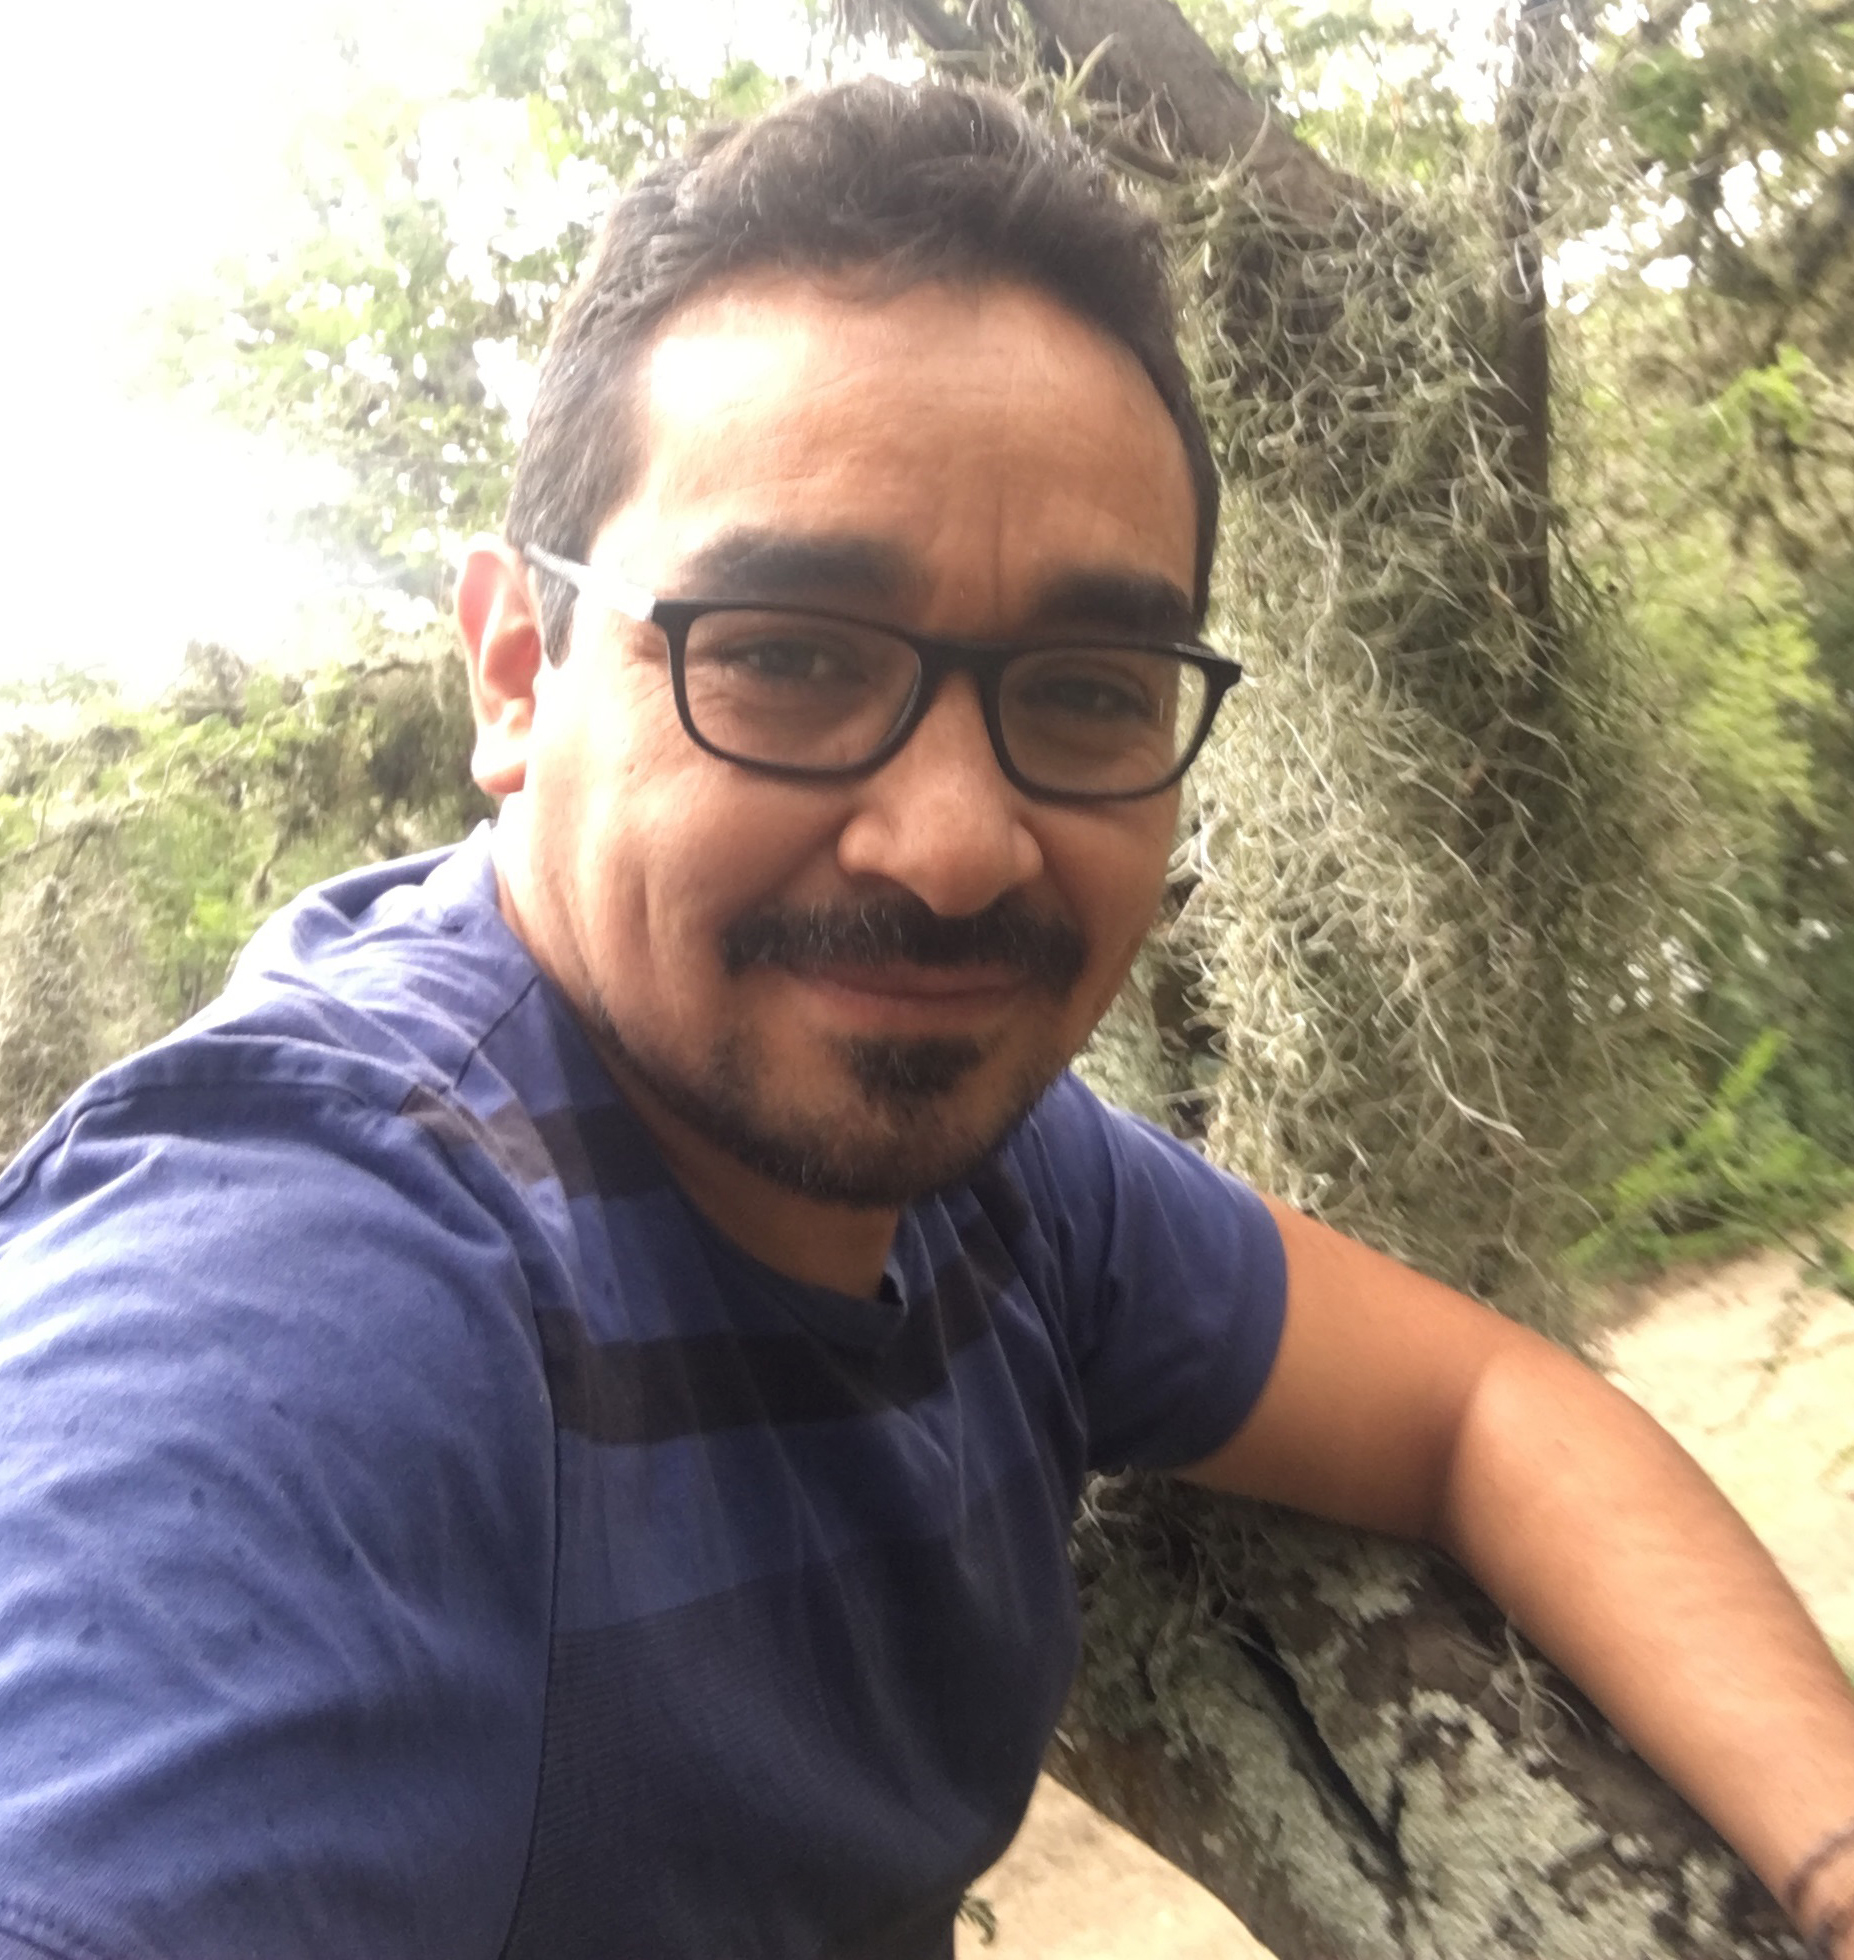 Marco Robles, TNC’s Indigenous communities specialist in Ecuador